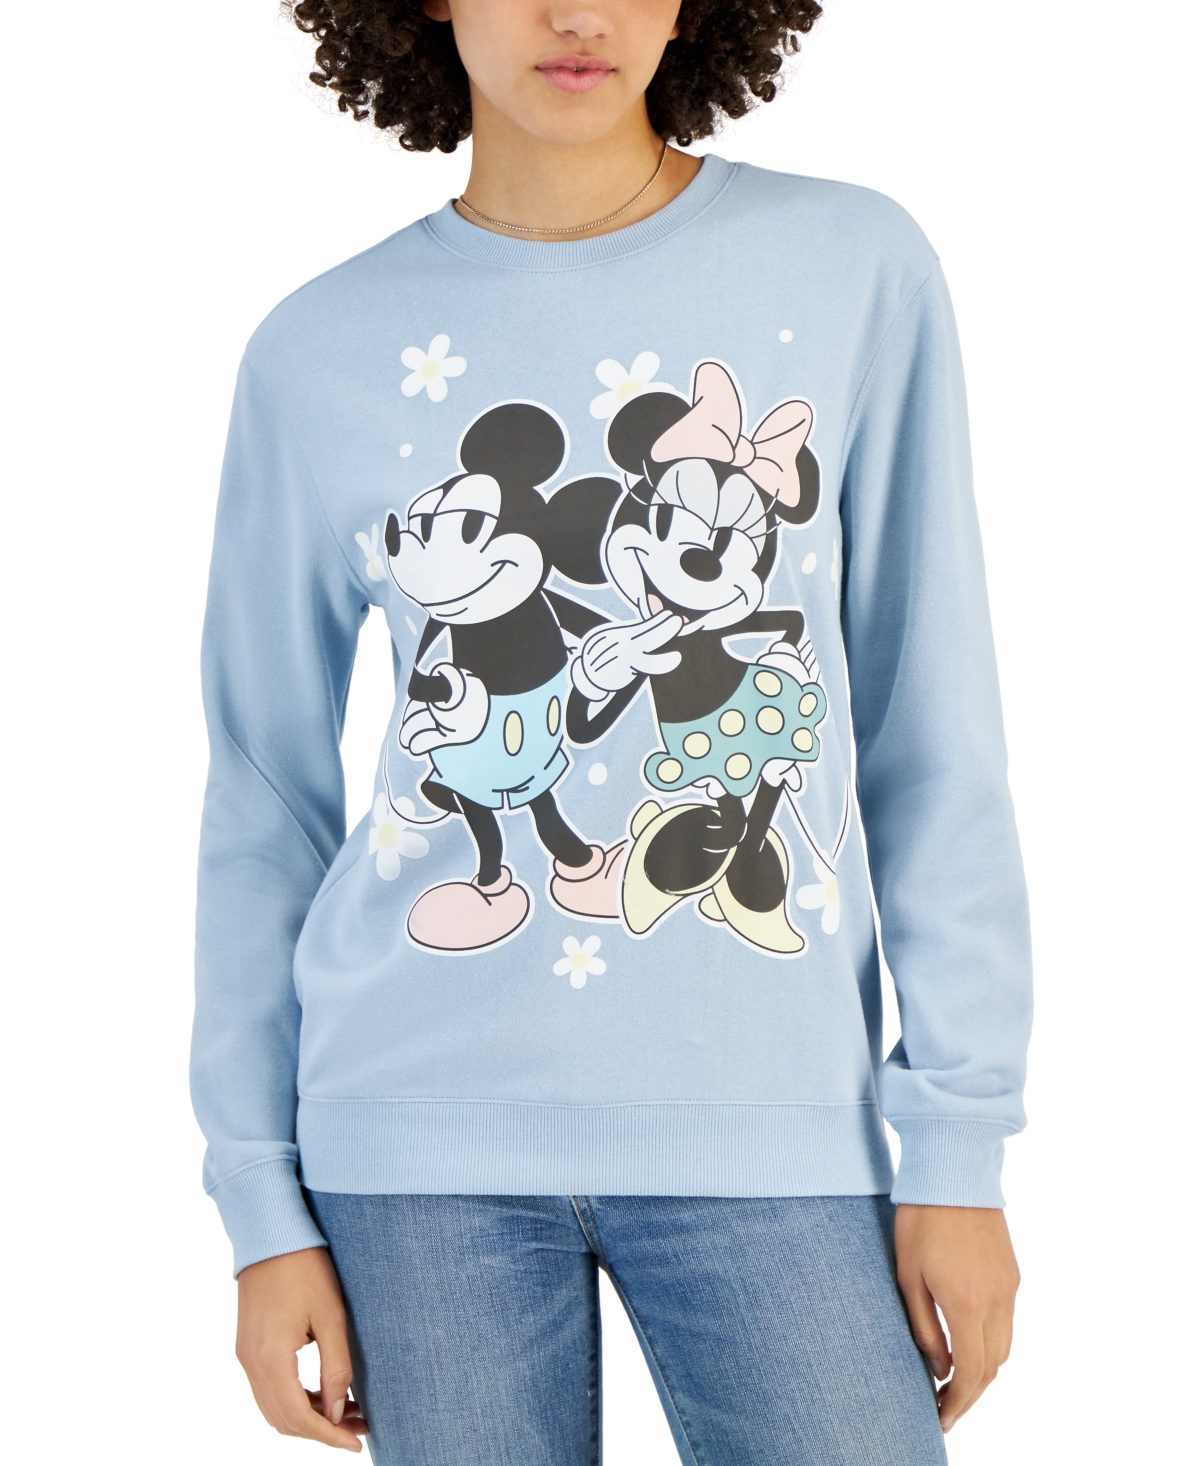 Disney Juniors' Mickey & Minnie Mouse Graphic Print Sweatshirt In Celestial Blue